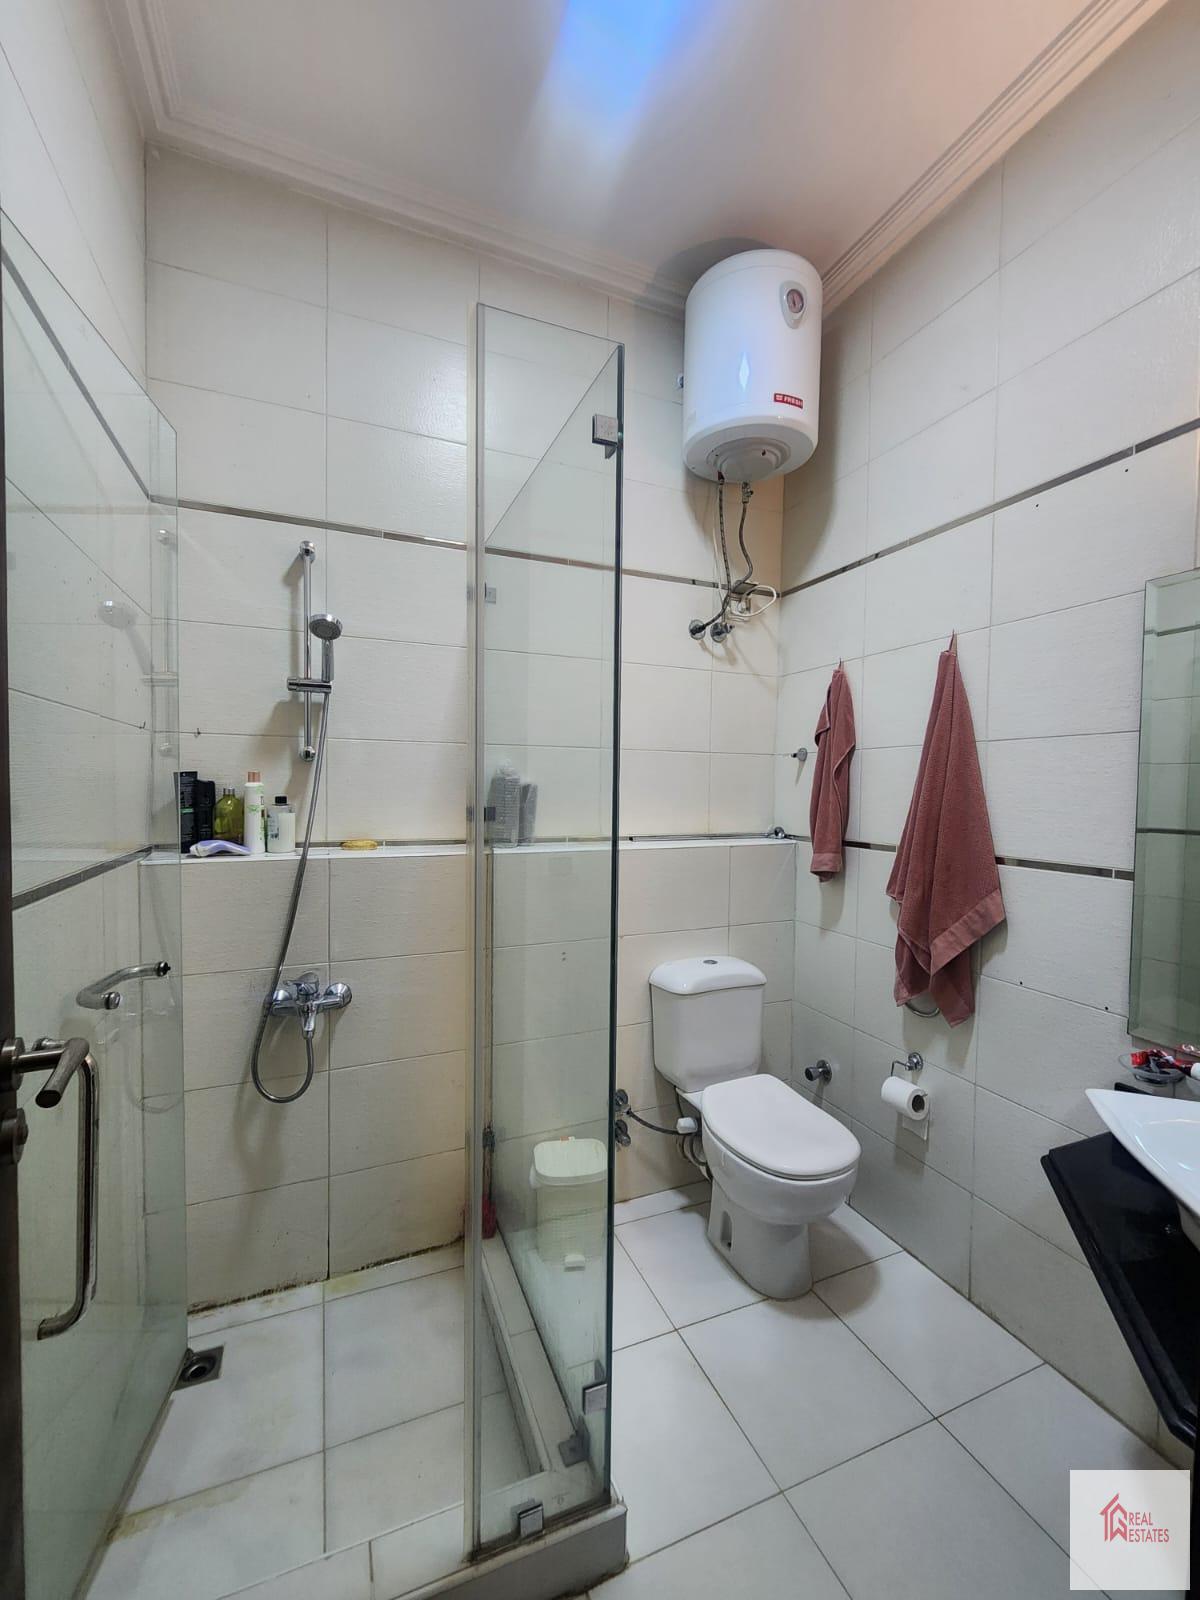 2 bedrooms 2 bathroom modern furnished apartments rent maadi sarayate